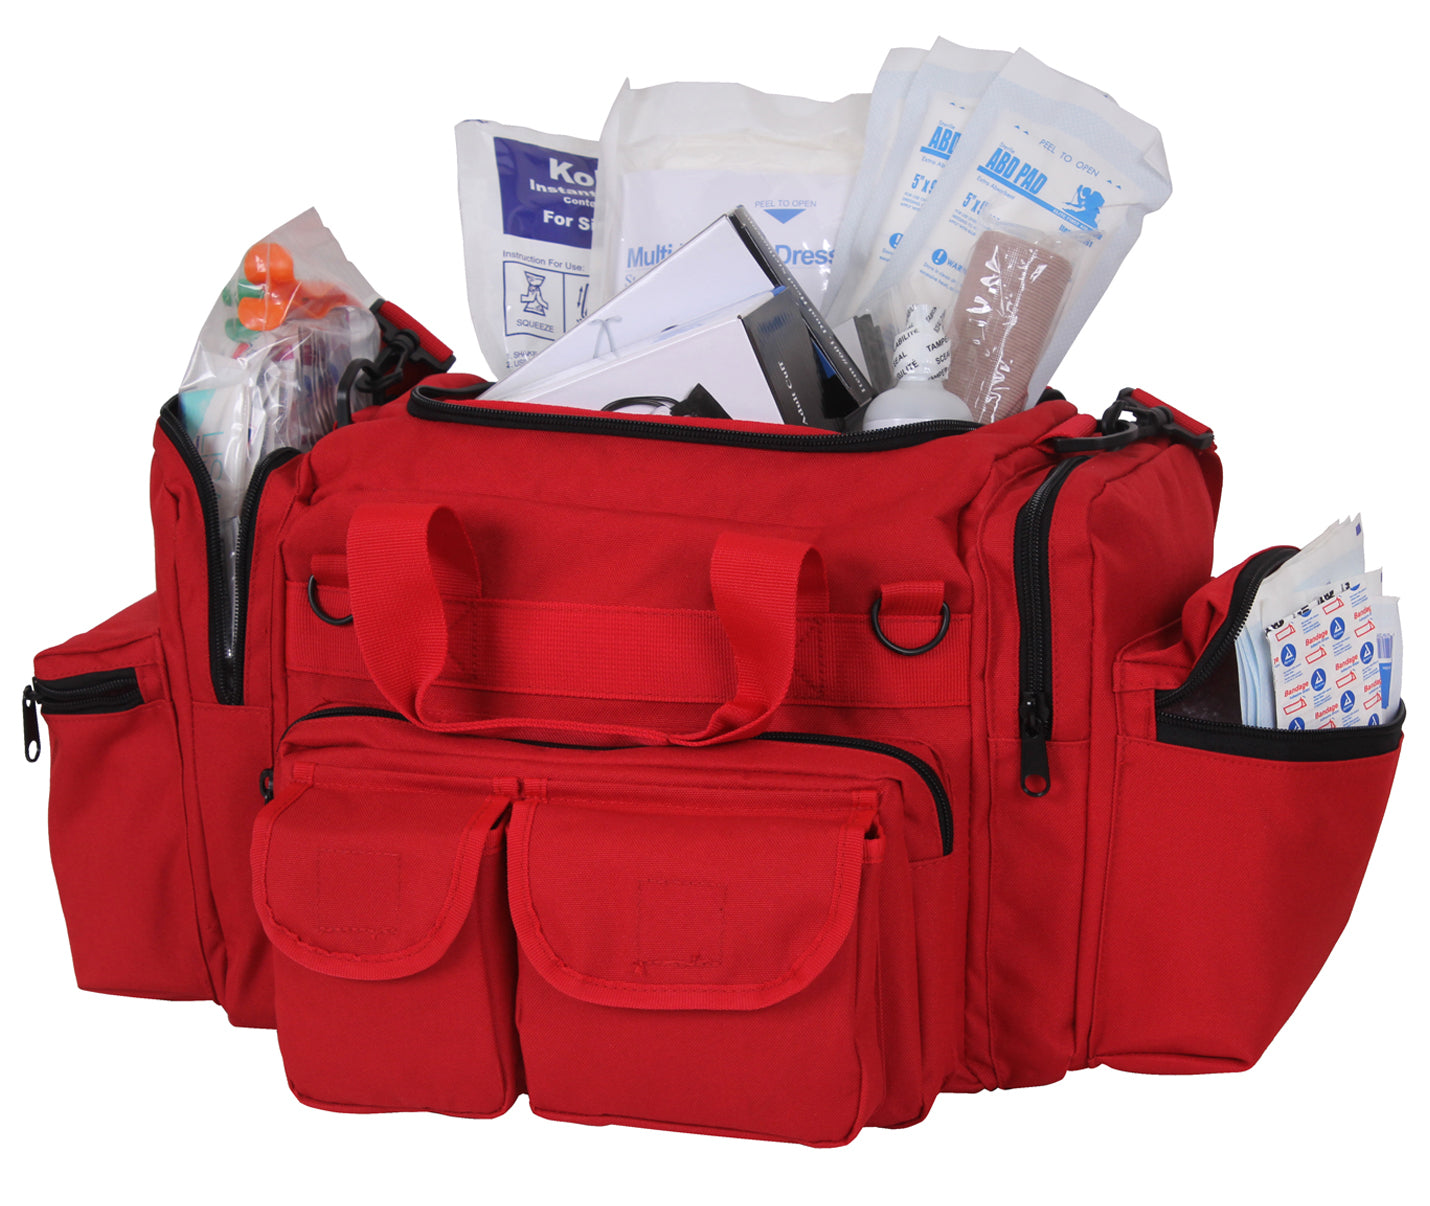 Rothco EMT Medical Trauma Kit